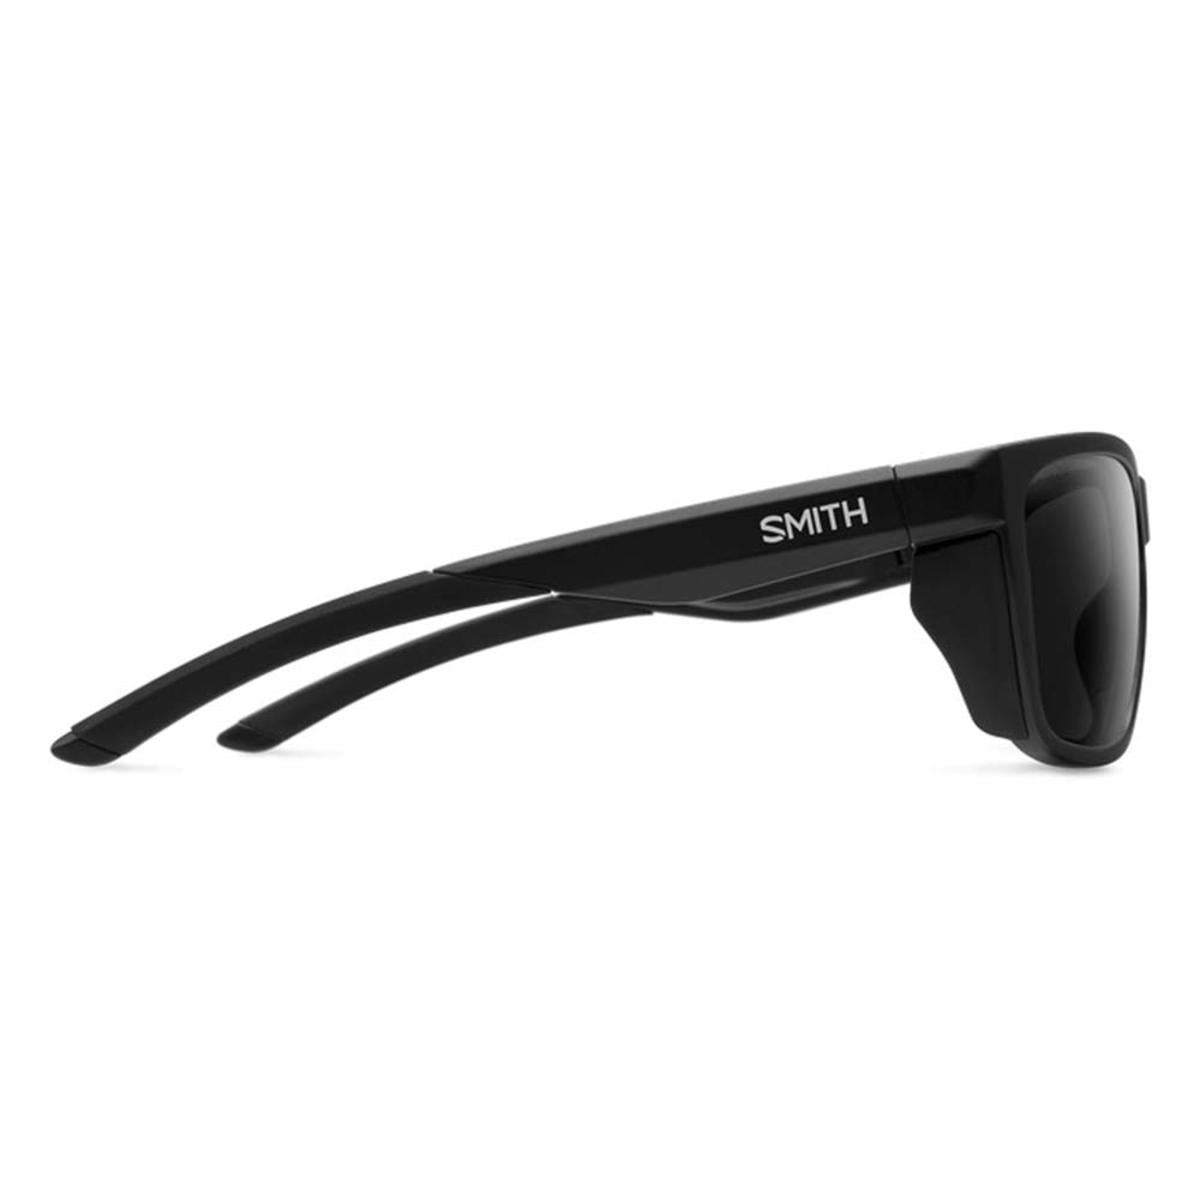 Smith Optics Longfin Sunglasses ChromaPop Polarized Black - Matte Black Frame